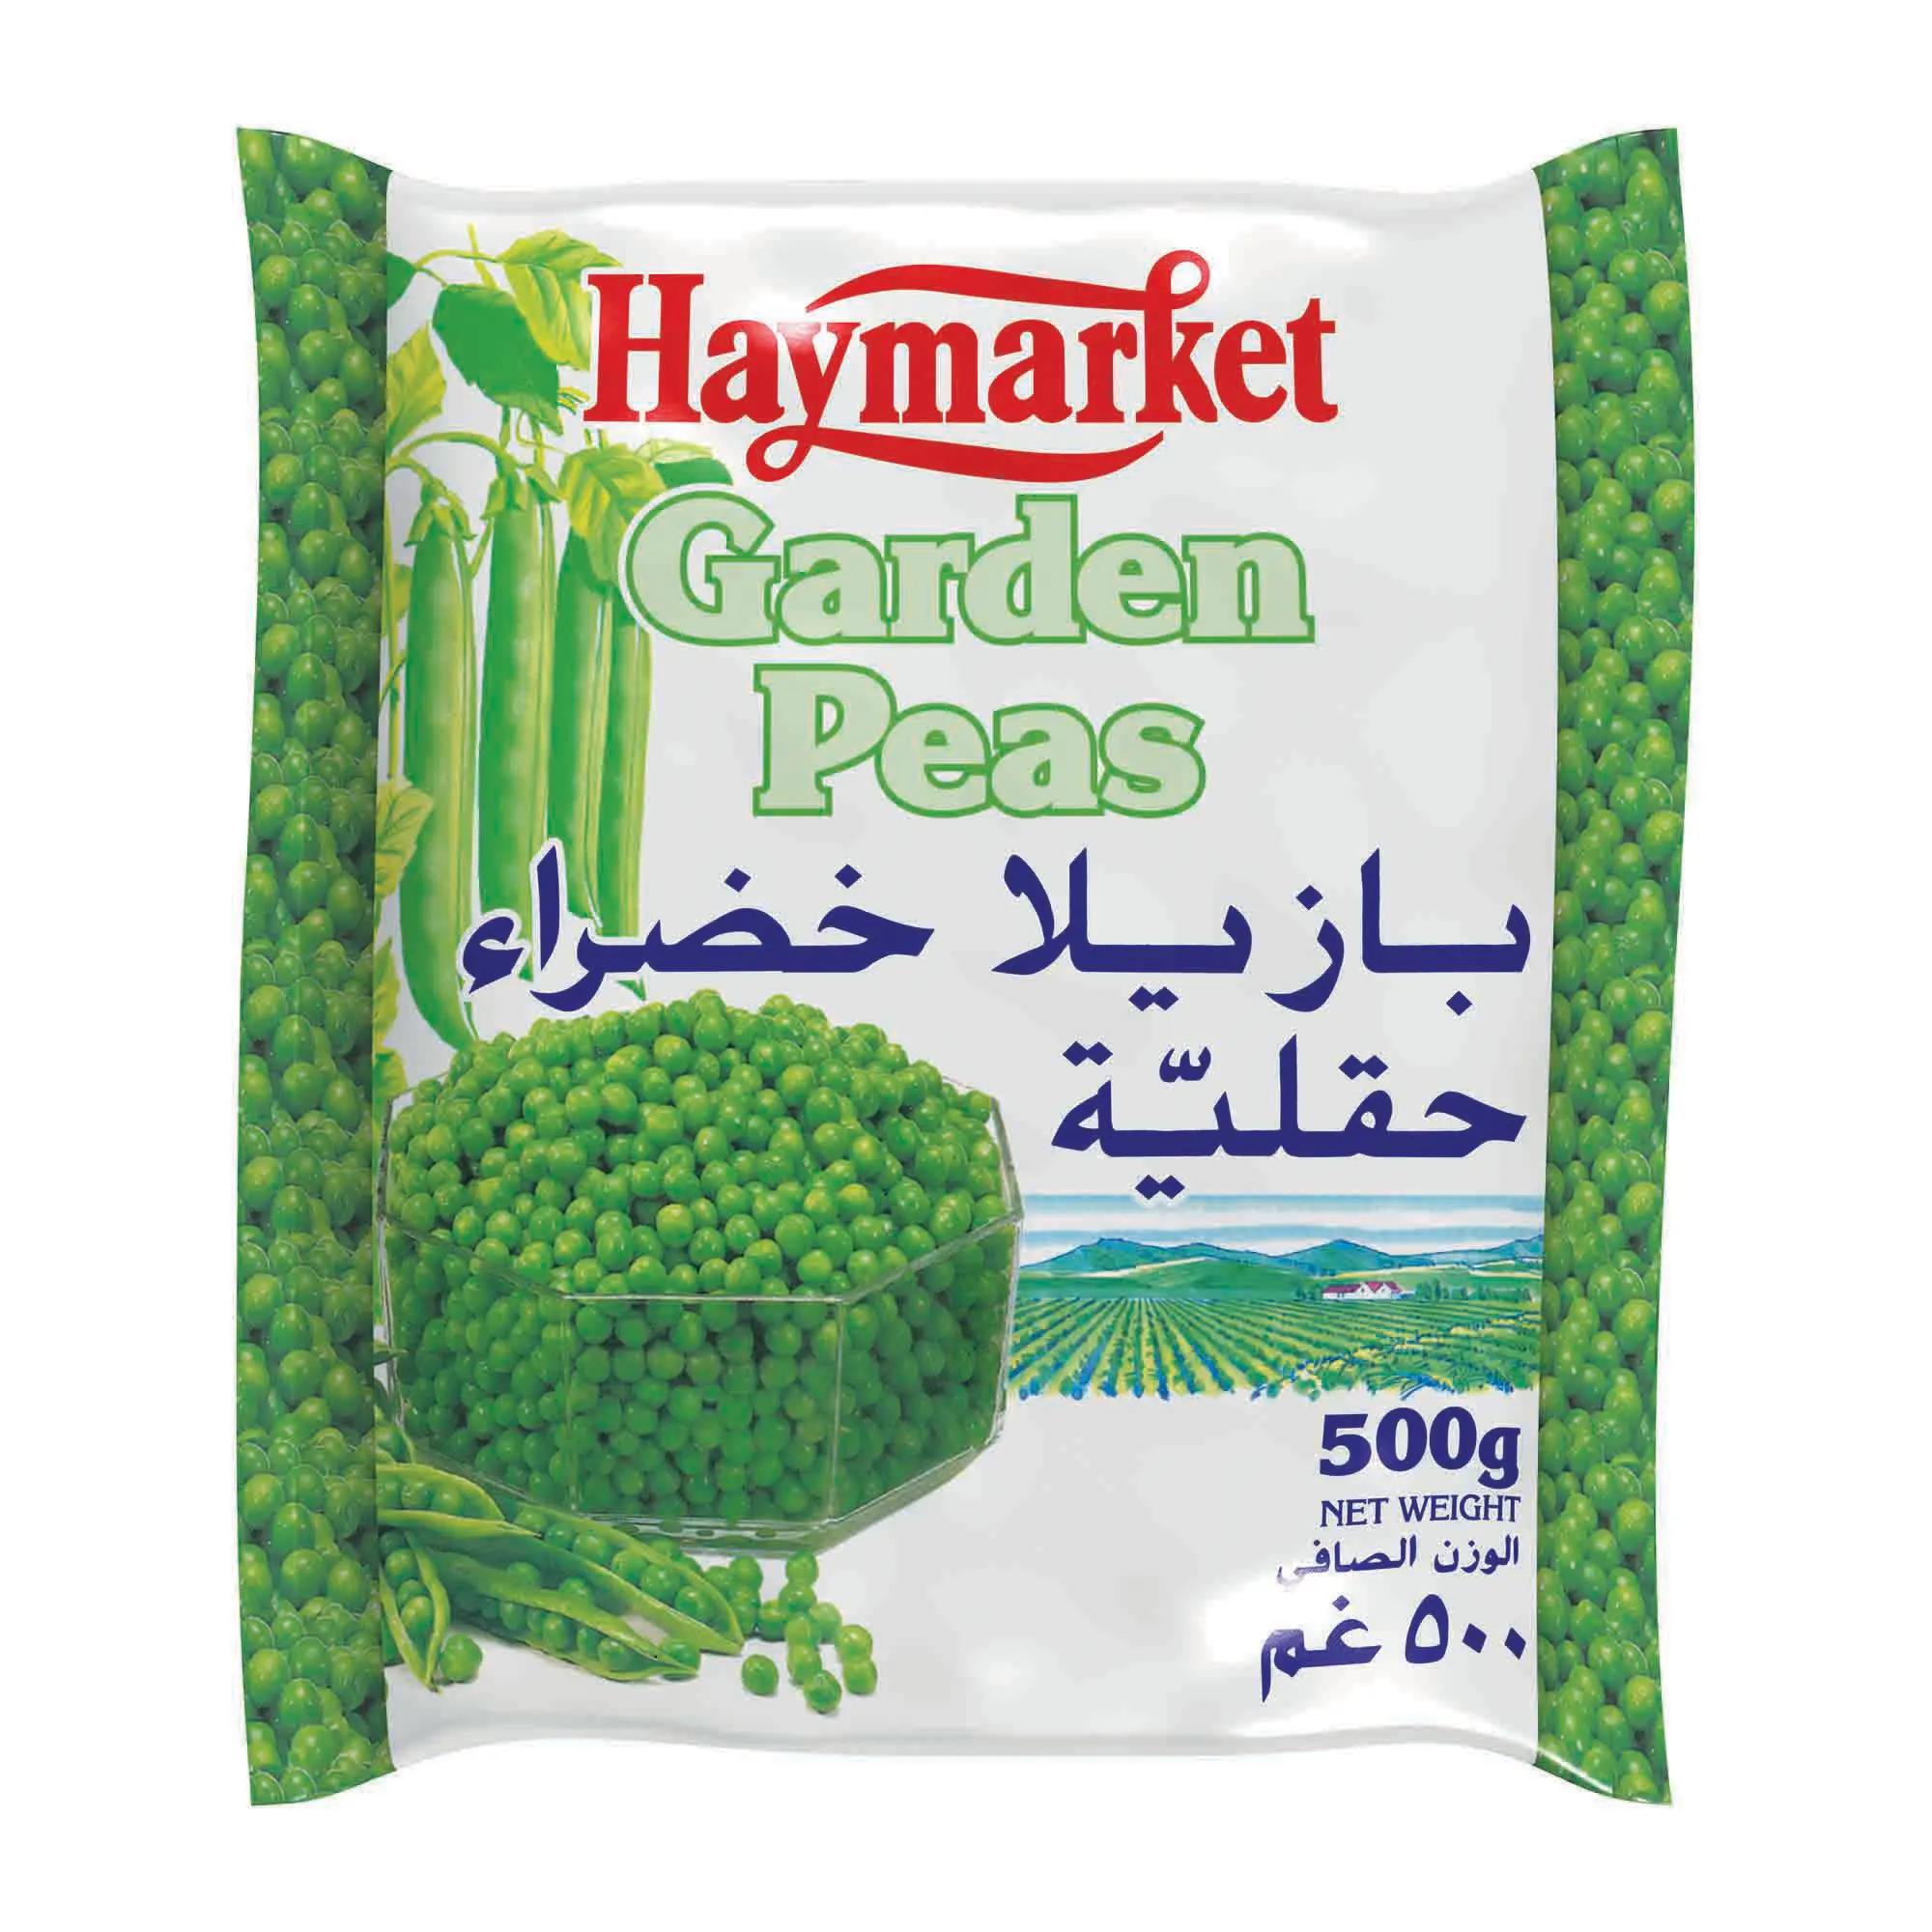 HAYMARKET GREEN PEAS N.ZLND 500 gm